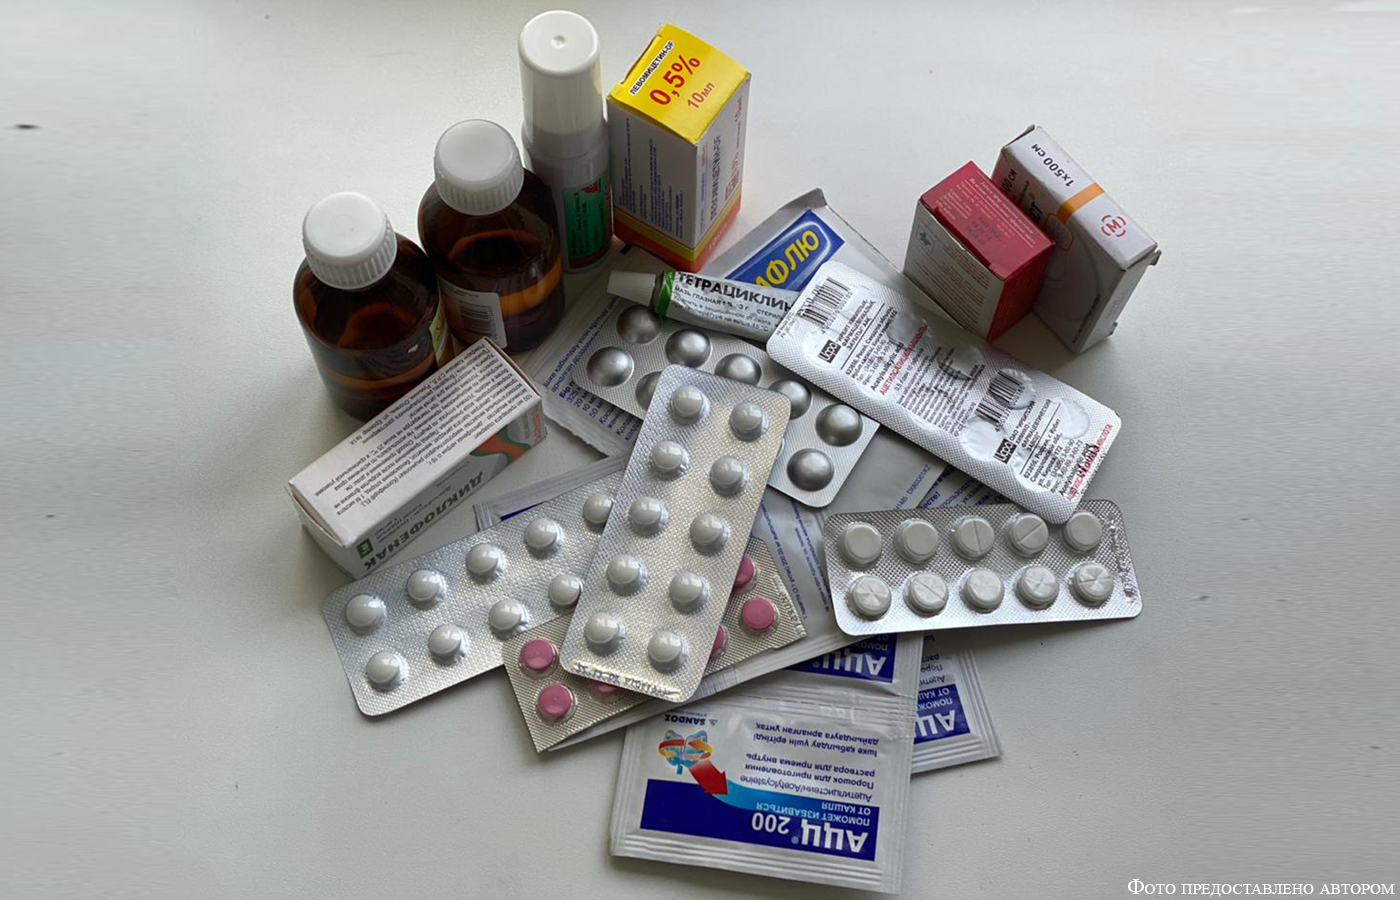 Вопрос ценообразования на лекарства